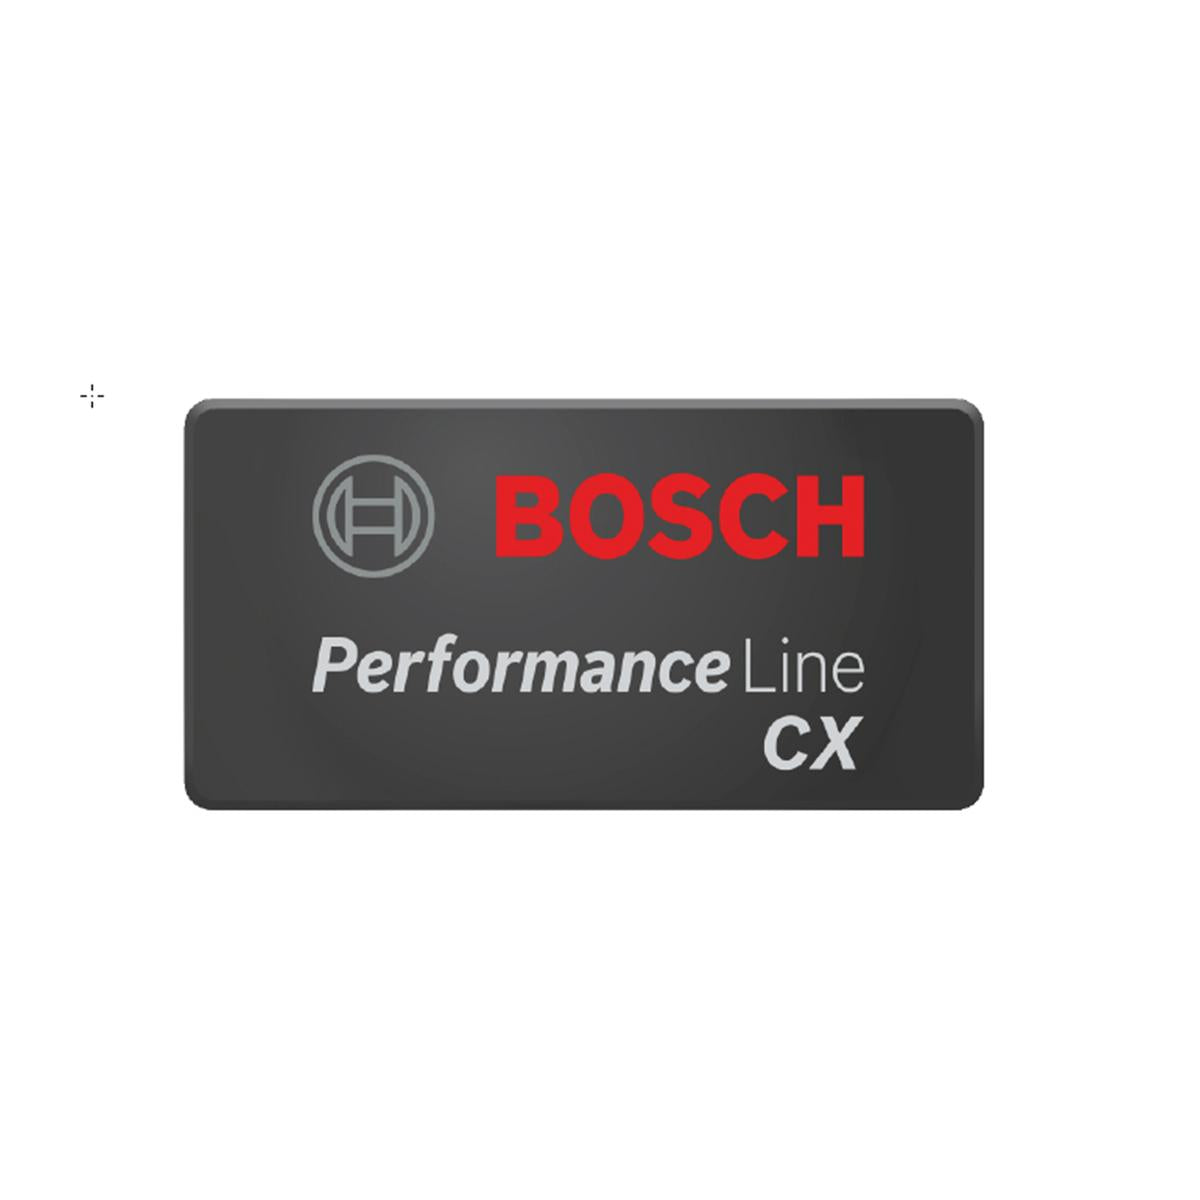 Bosch ebike Logo Cover Performance Line CX rectangular BDU2XX